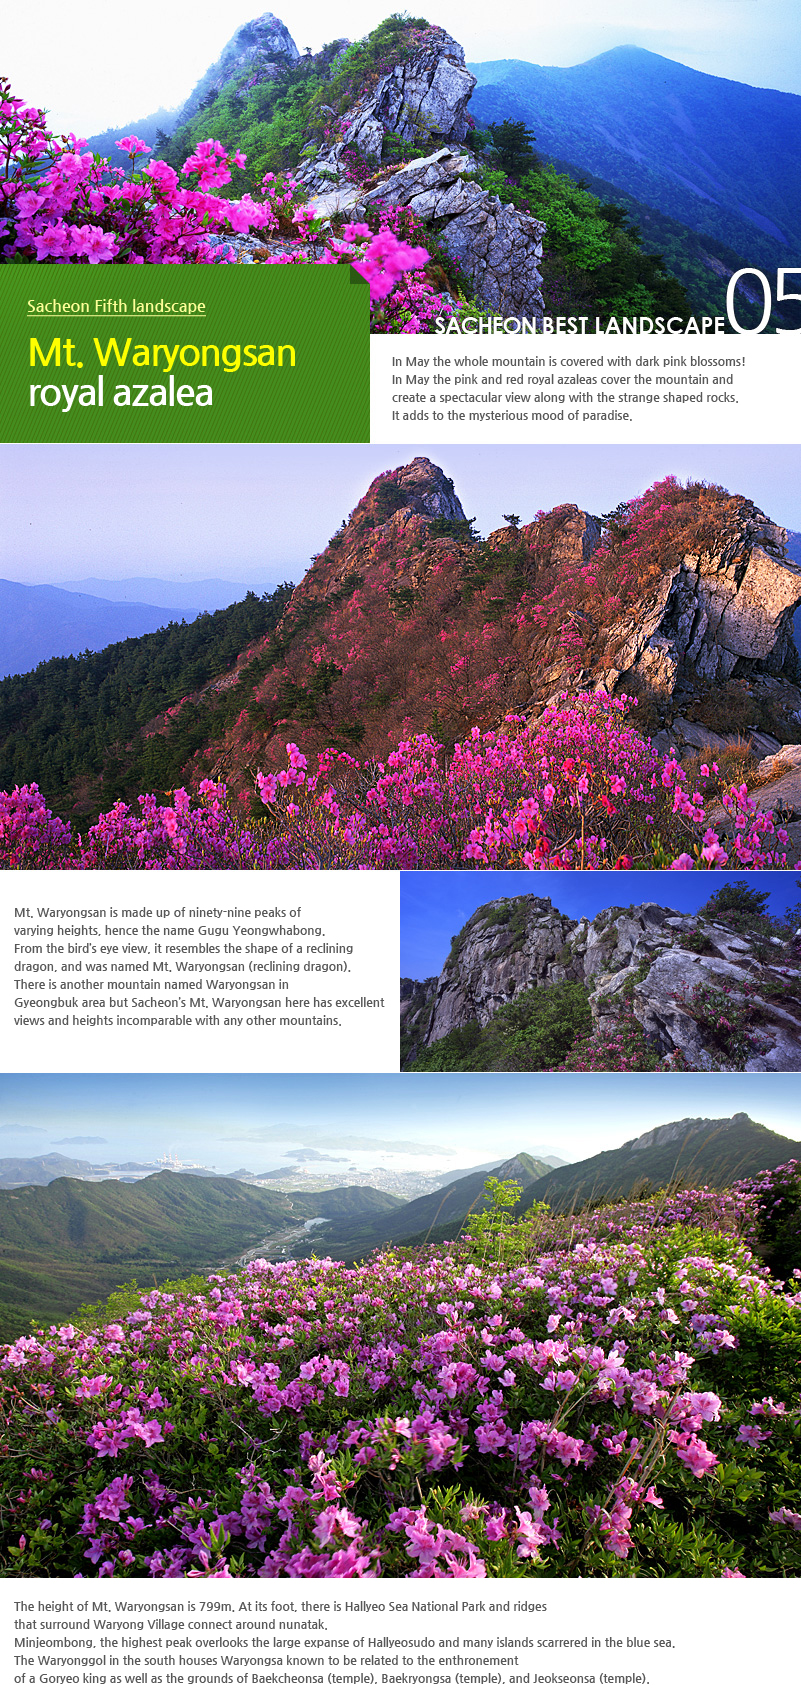 Mt. Waryongsan royal azalea